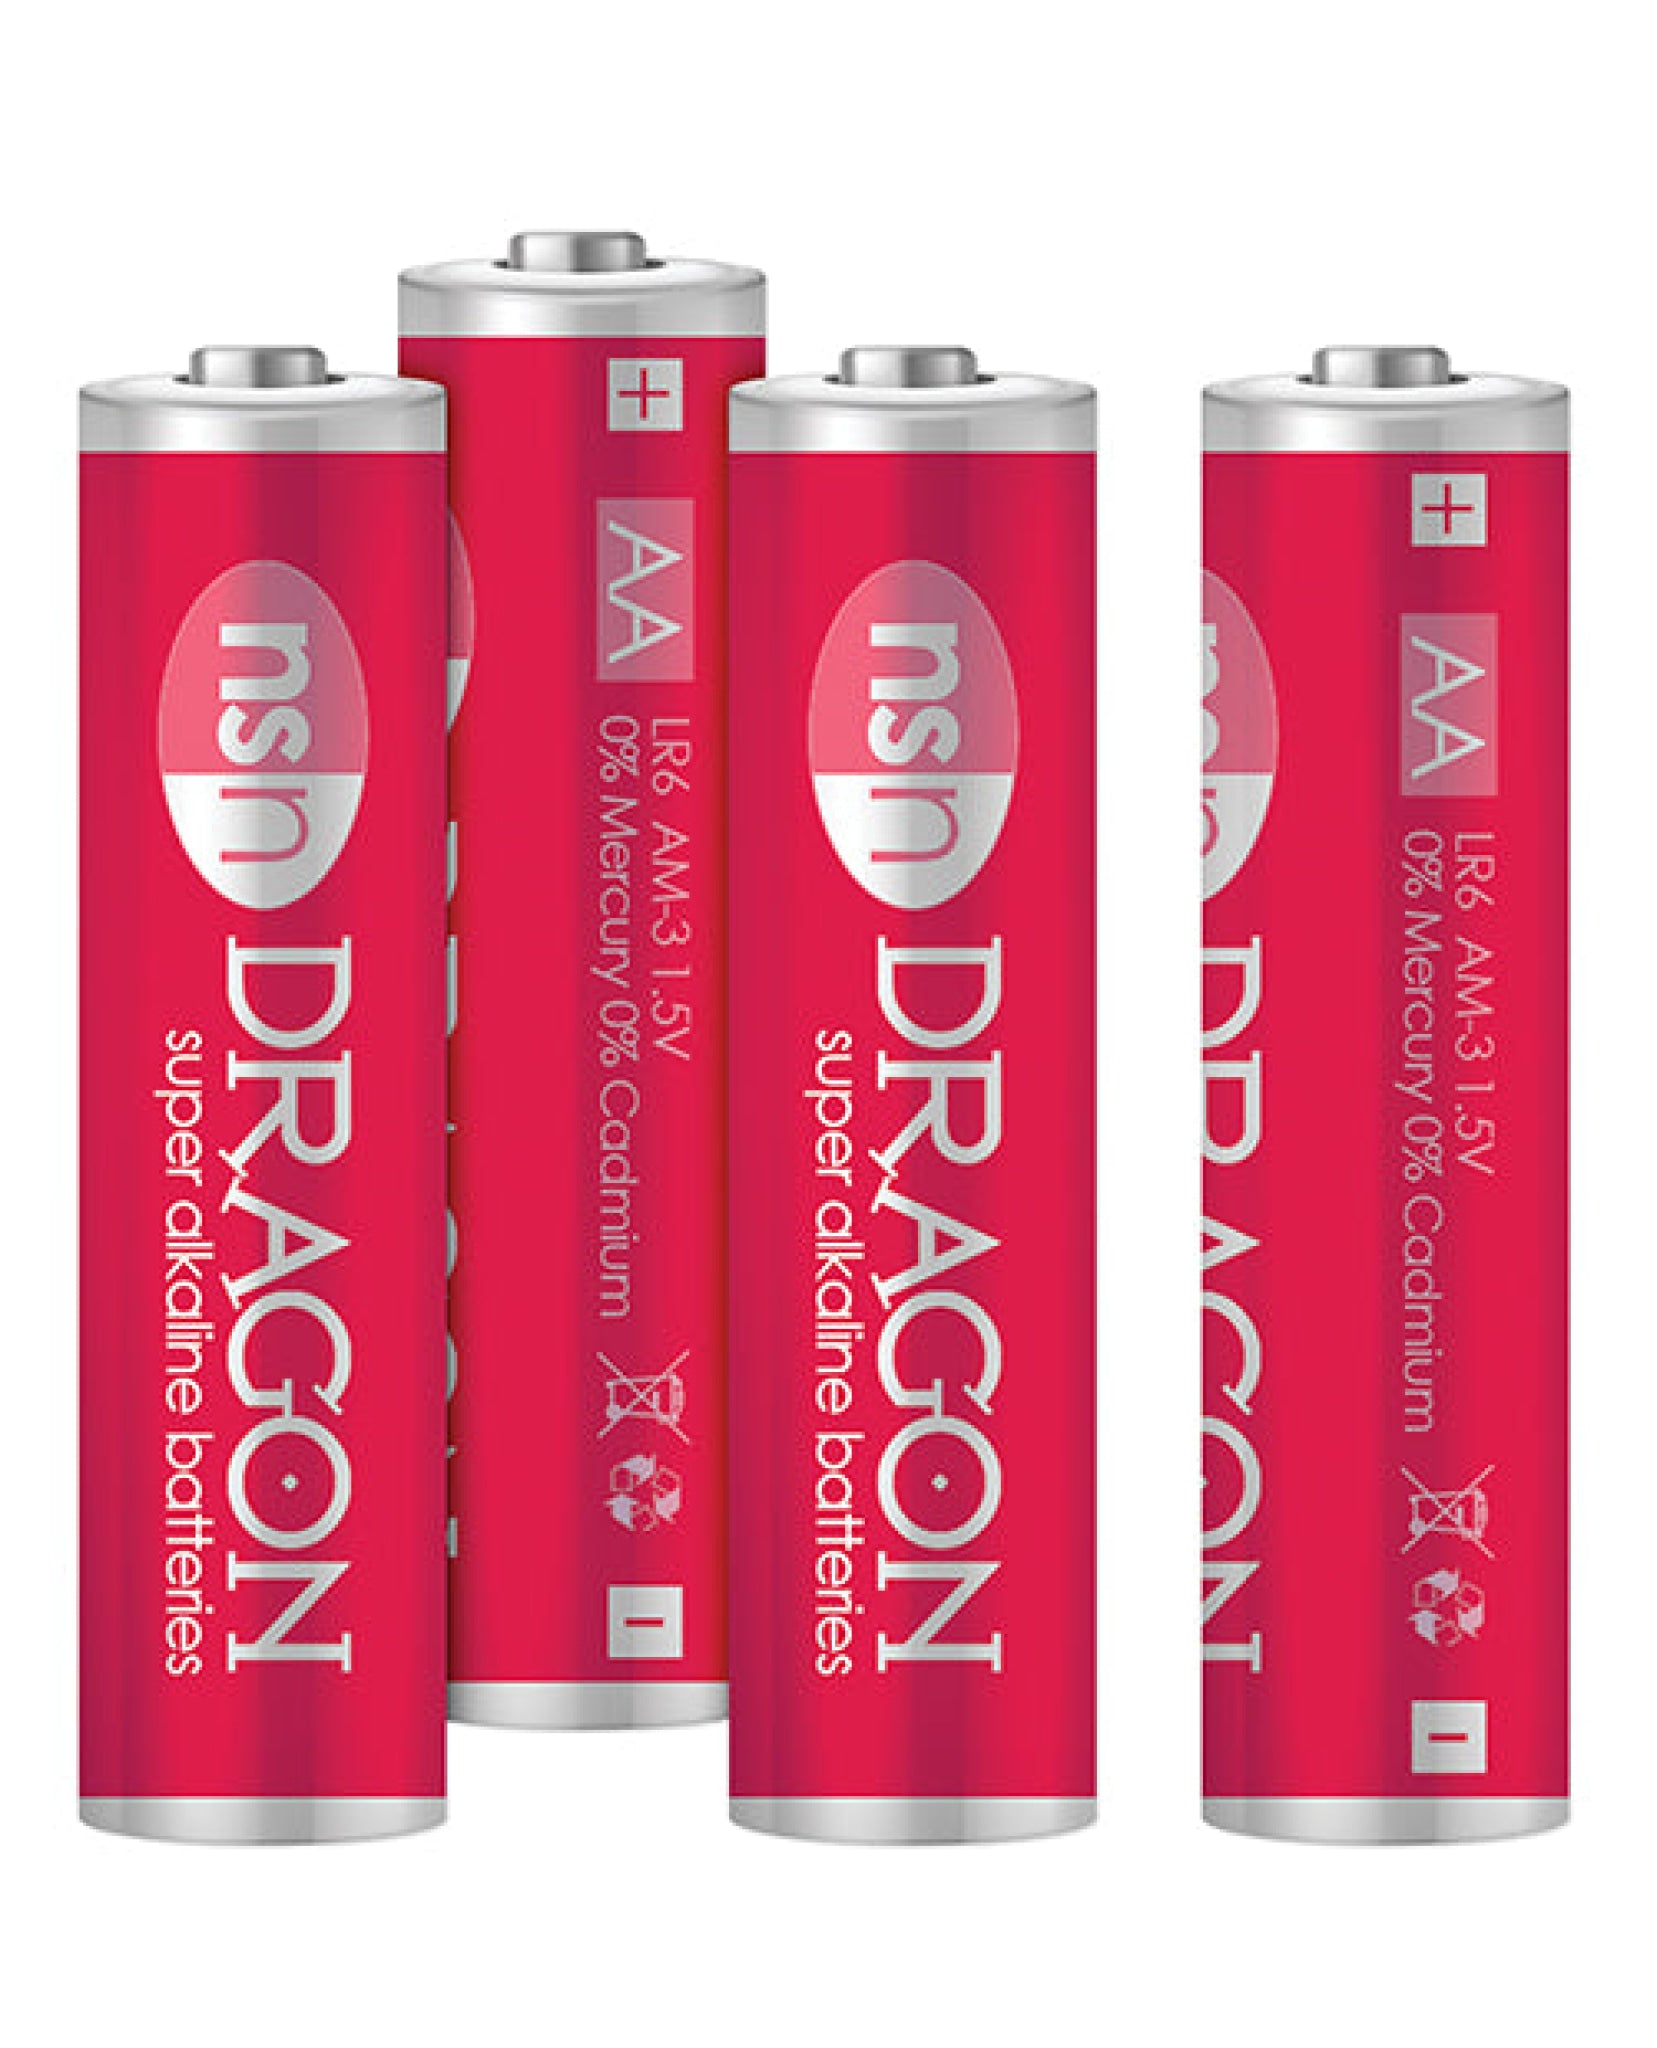 Dragon Alkaline Batteries - Aa Pack Of 4 Dragon Alkaline Batteries